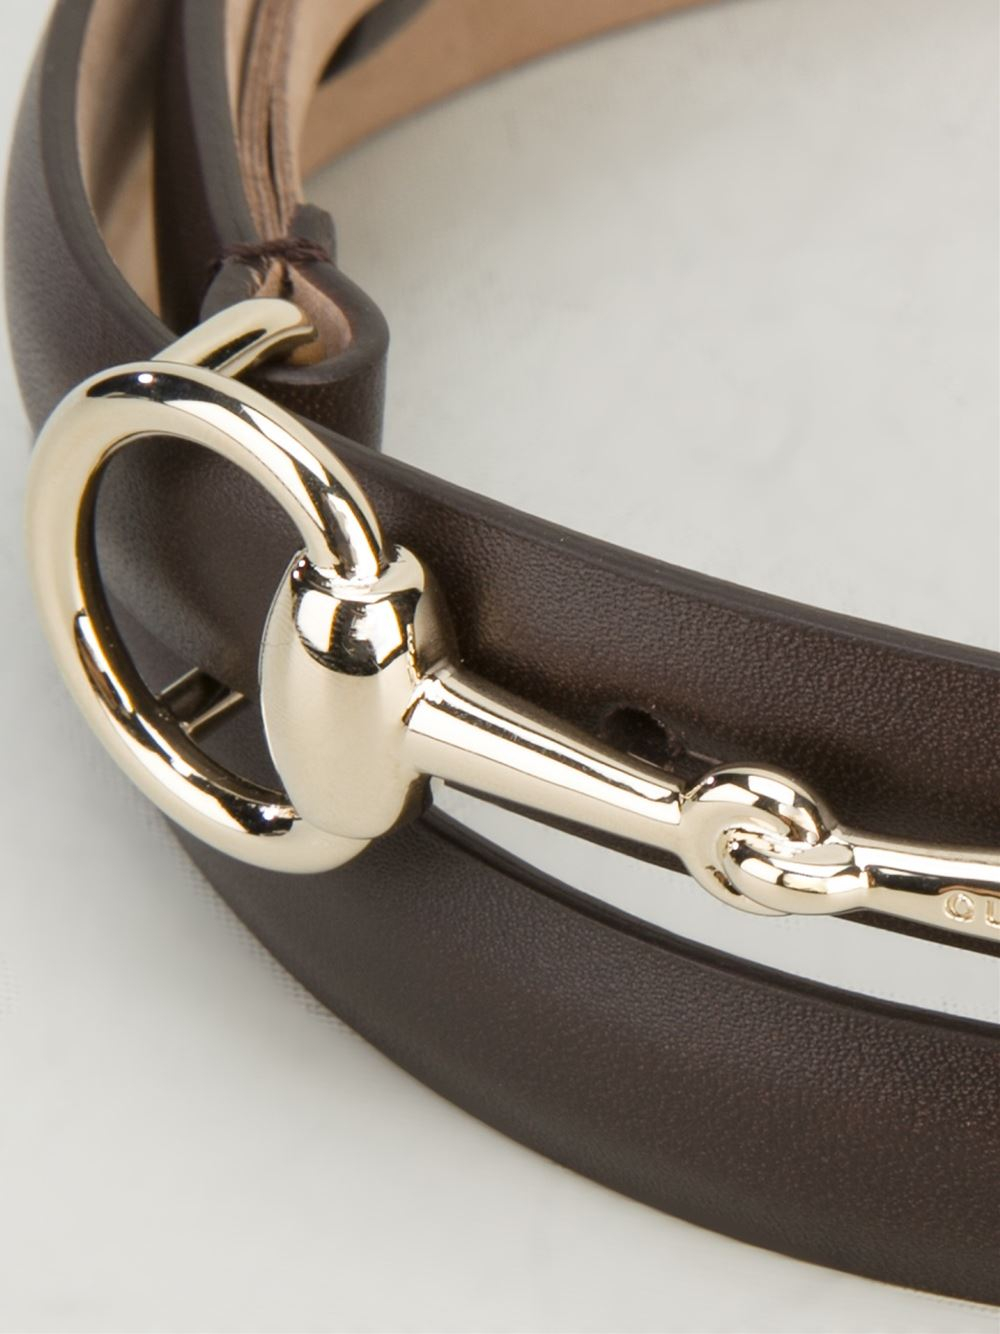 St Germain Gold Horsebit Genuine Leather Belt Black Adjustable 